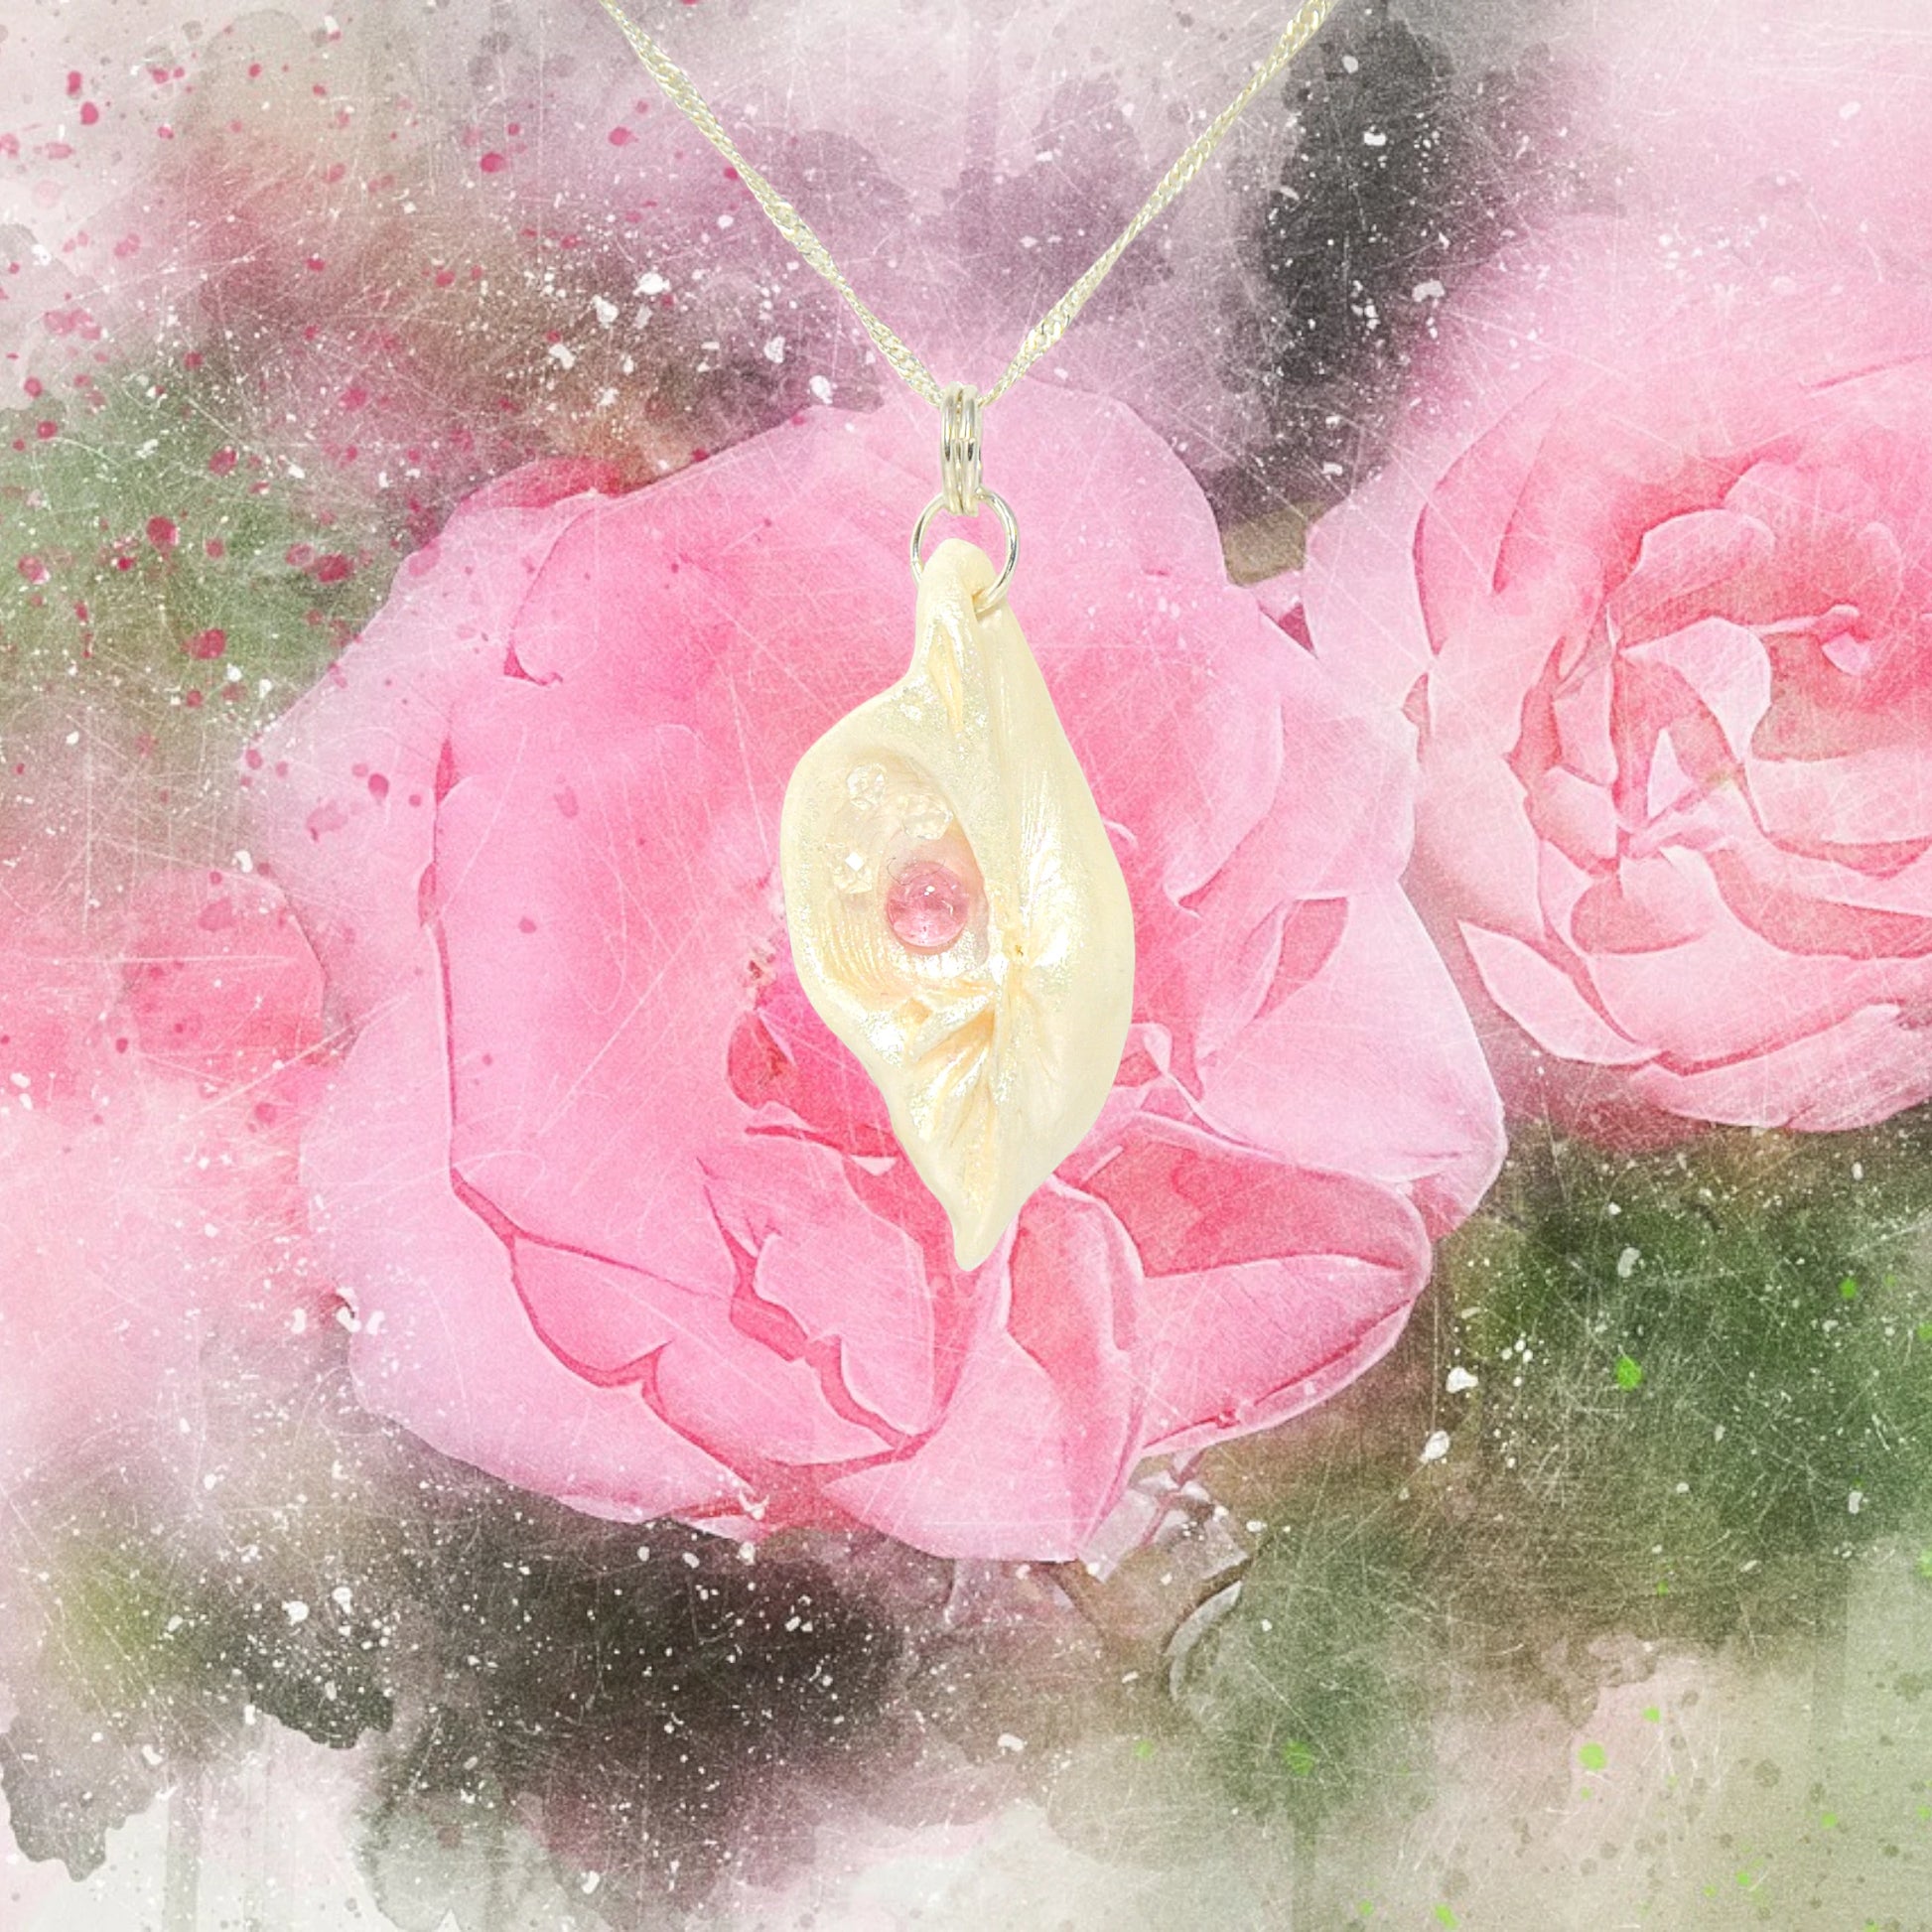 This natural seashell pendant has Pink Tourmaline gemstone and three Herkimer Diamonds that compliments the pendant. The pendant is shown with a pink rose background.